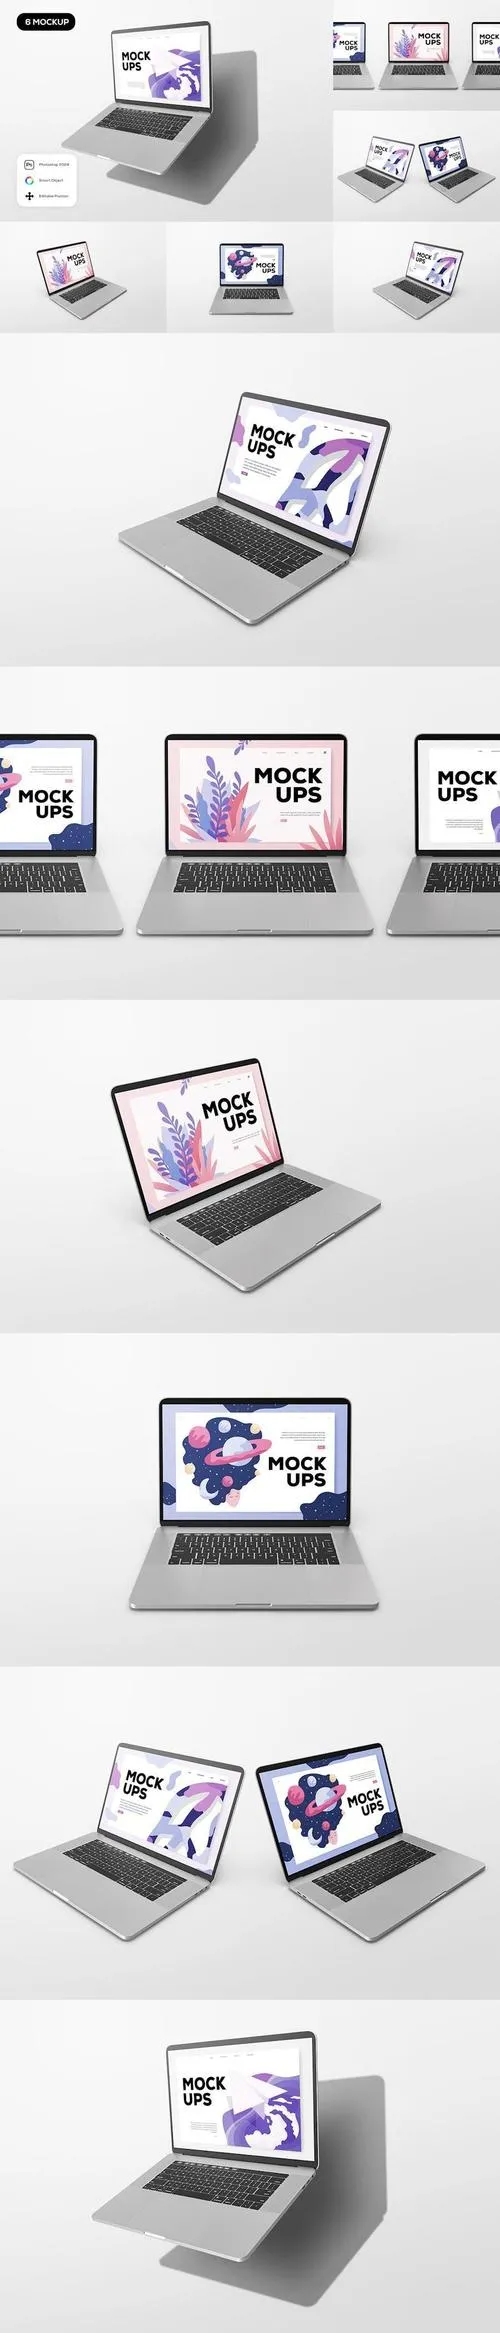 Silver Apple Macbook Pro Mockup